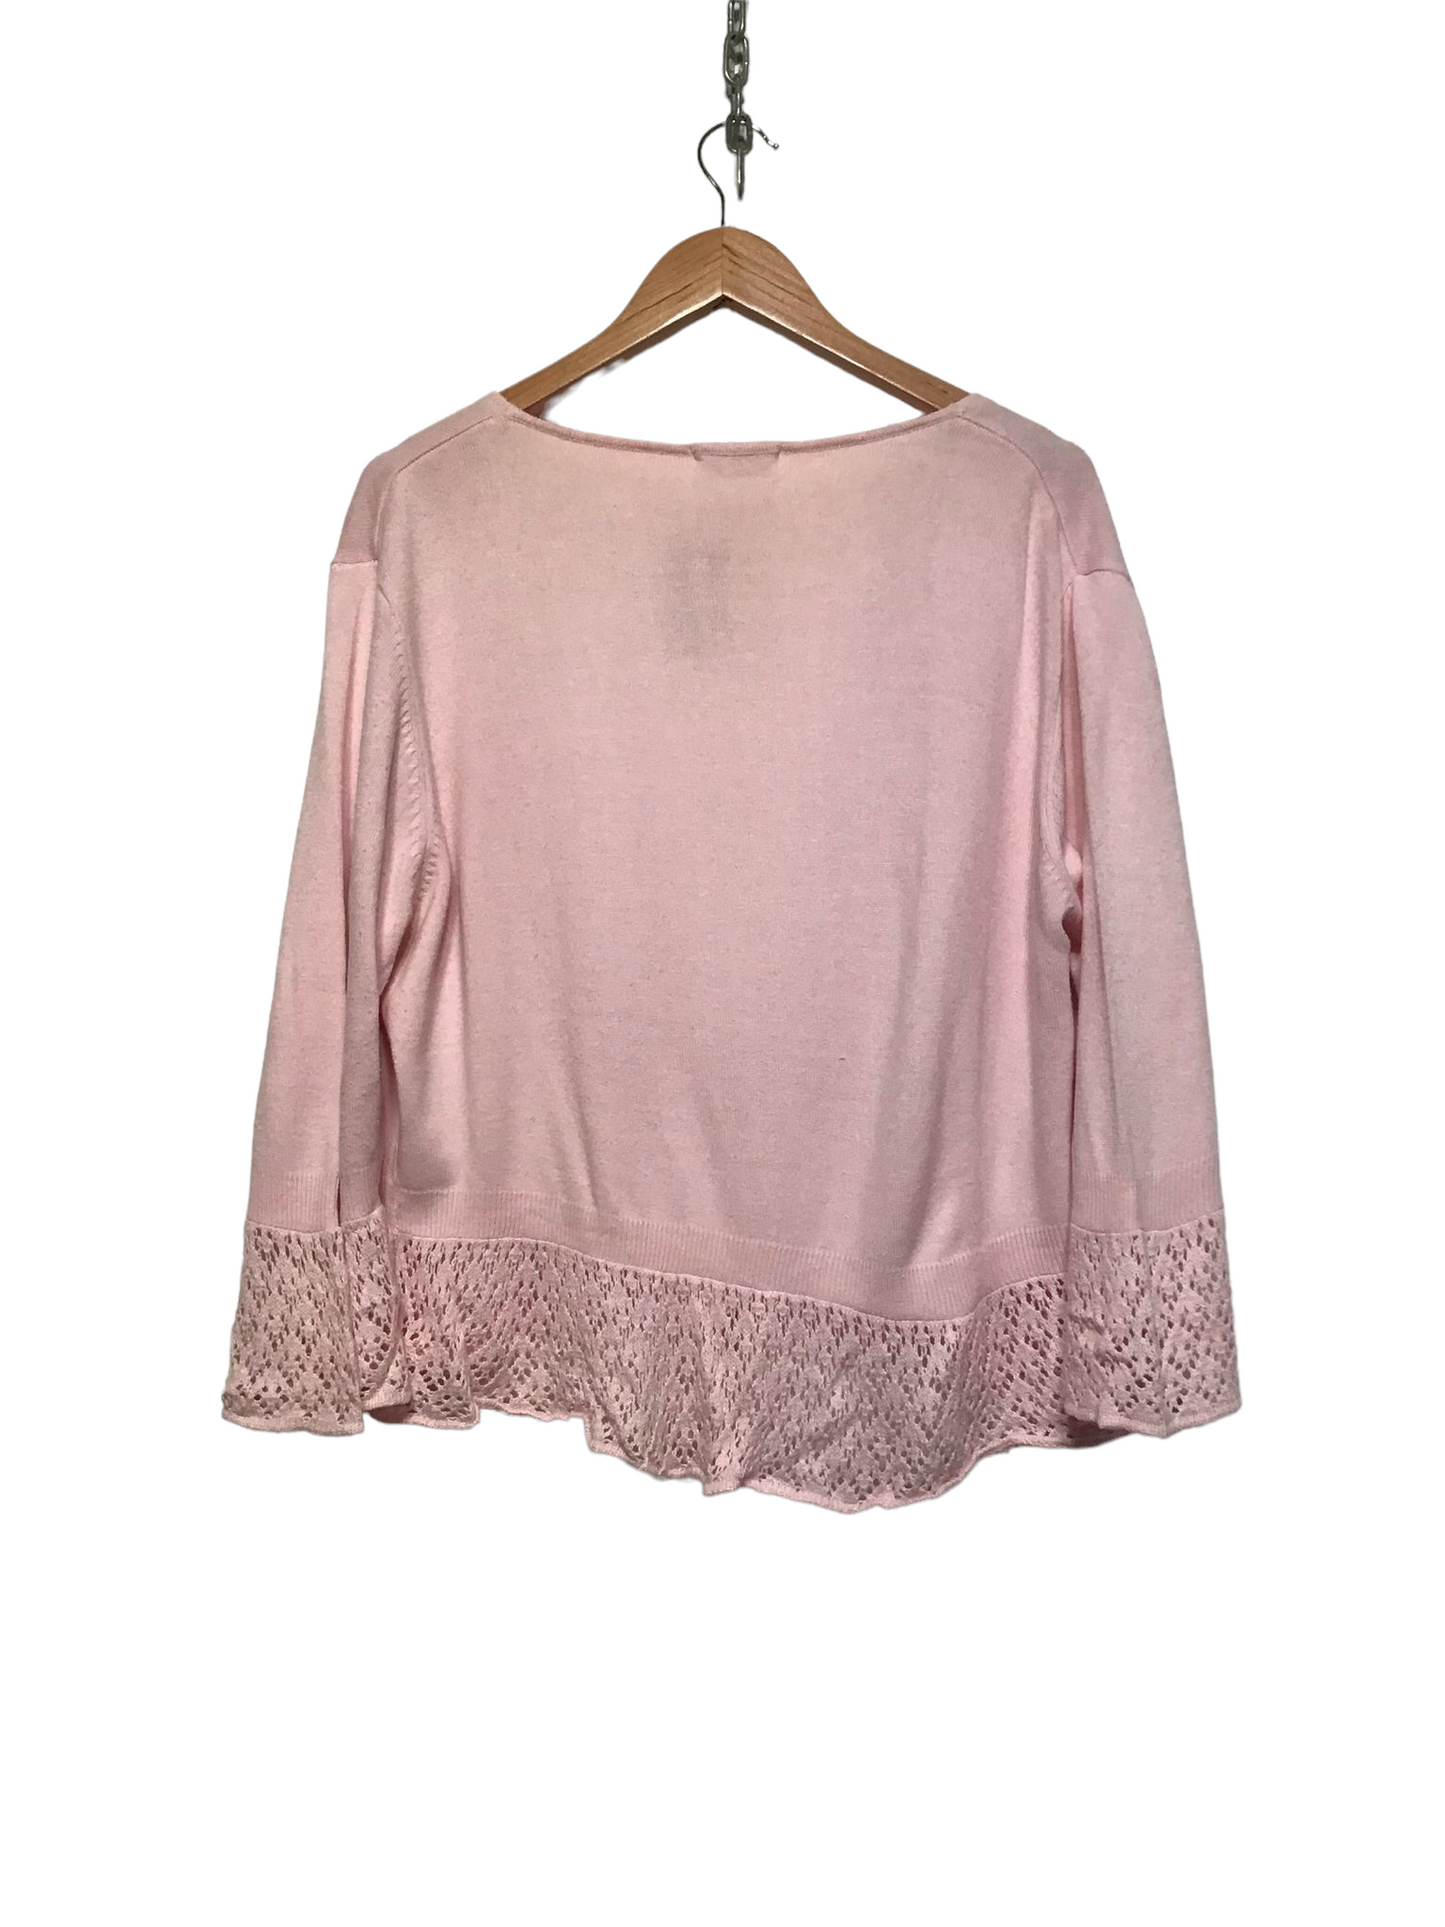 Pink Knit Cardigan (Size XL)